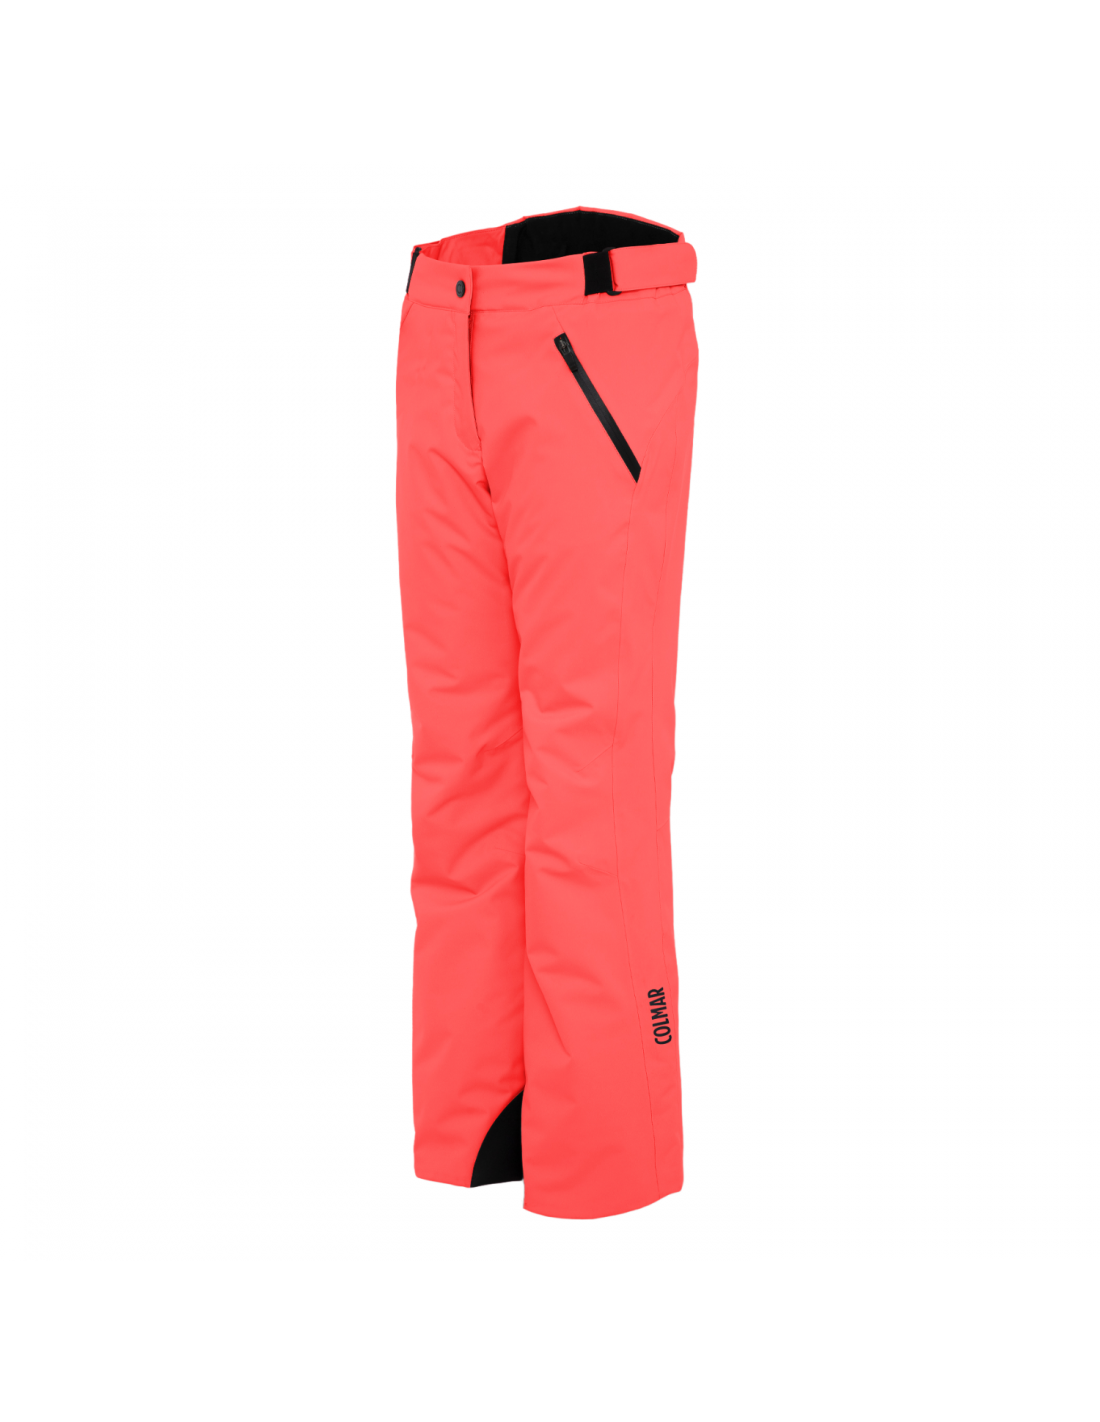 Women's Colmar Padded ski pants with adjustable waist